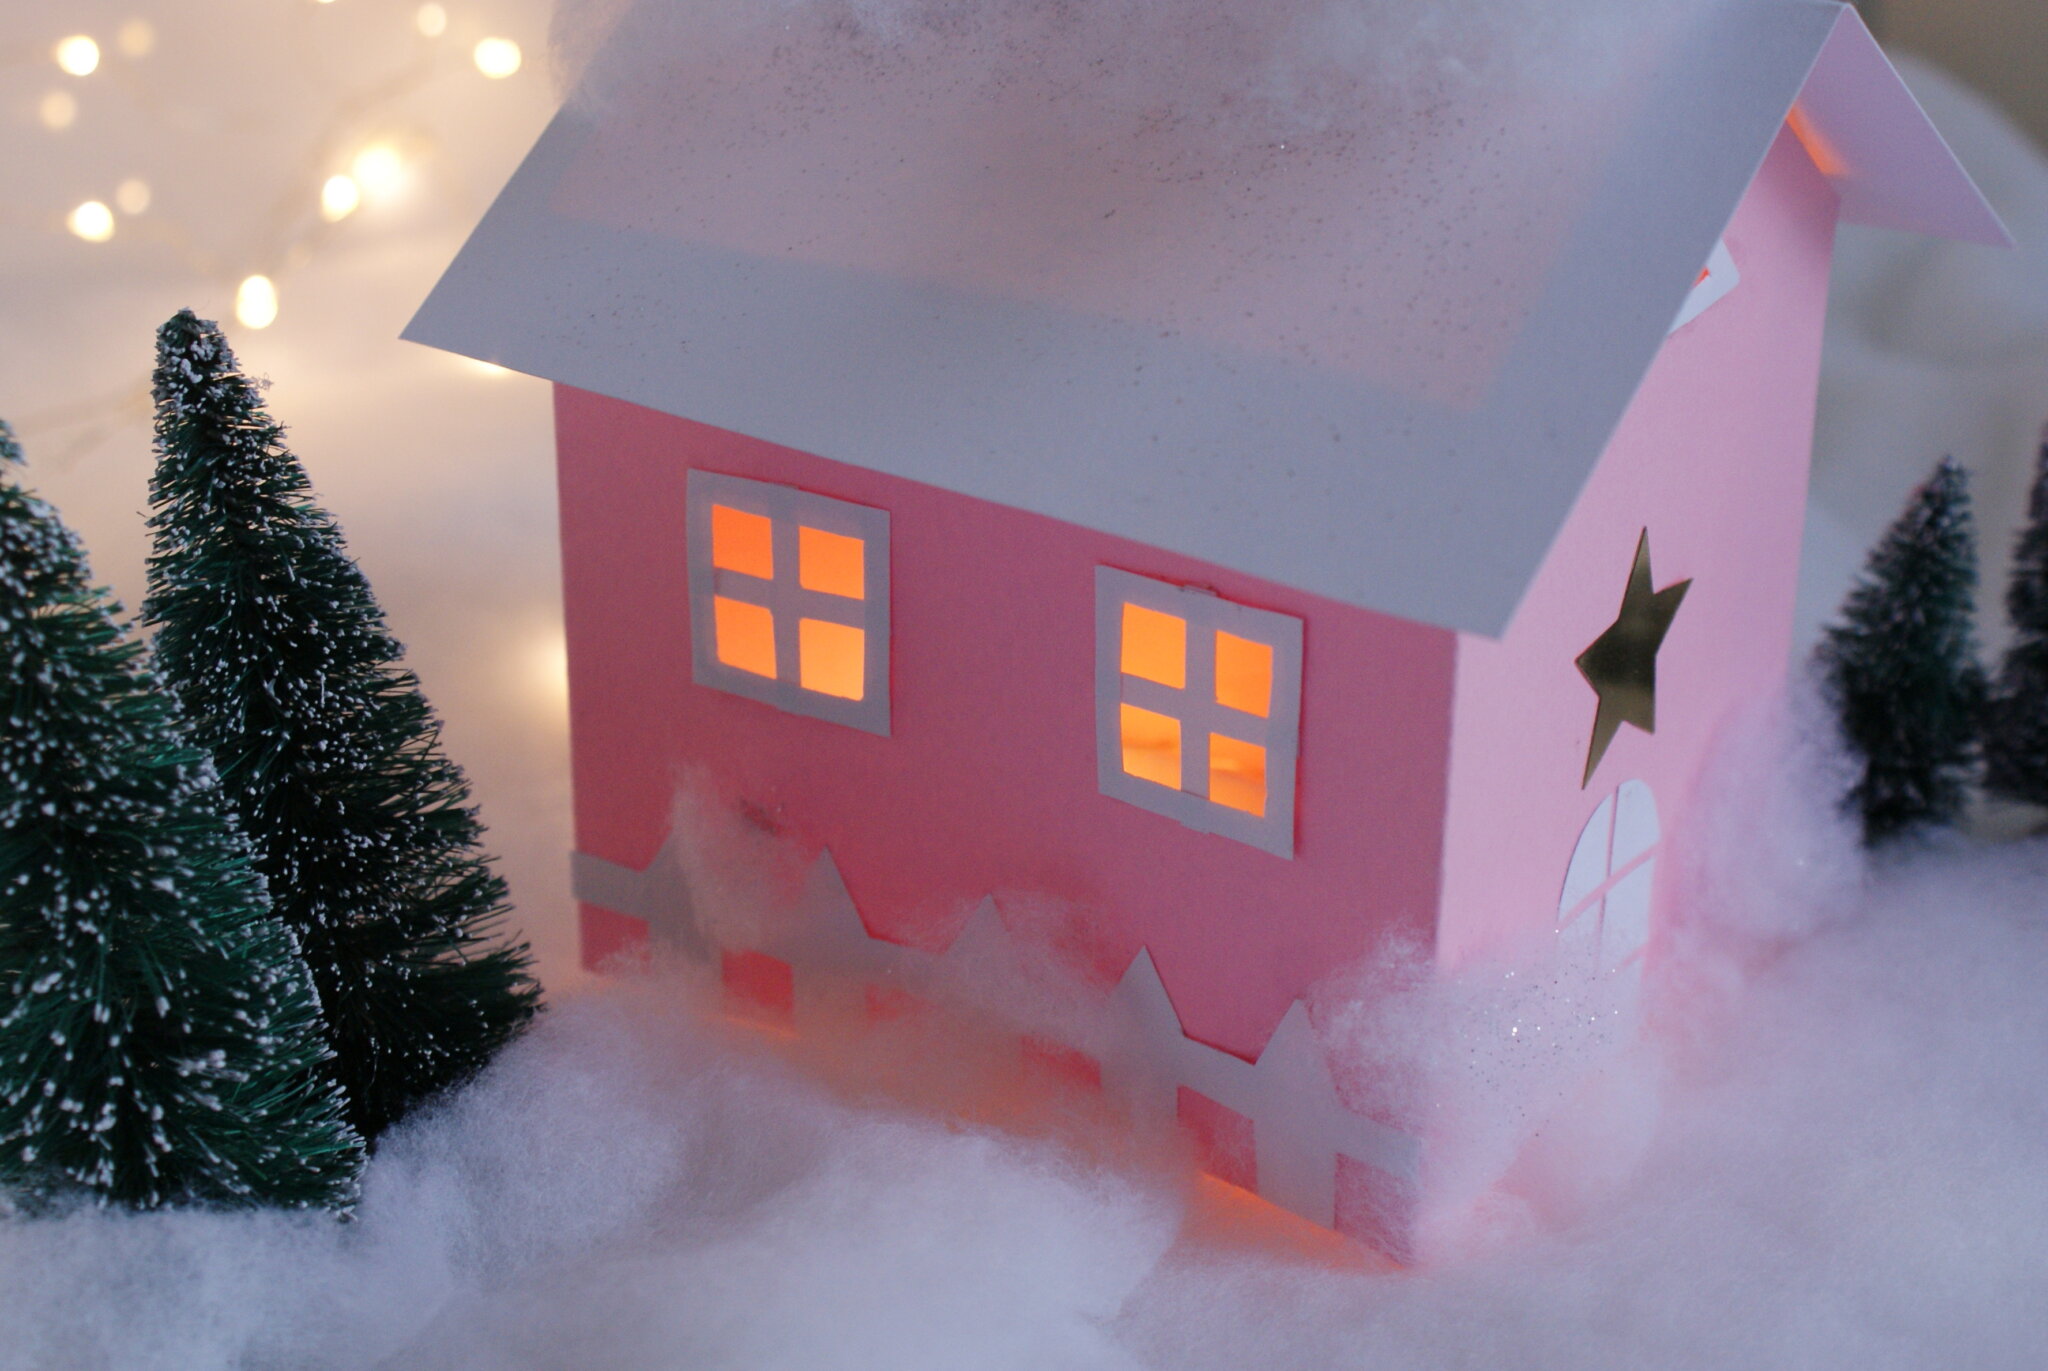 diy paper house christmas winter scene village craft idea decor home easy tutorial glitter fairy ultimate